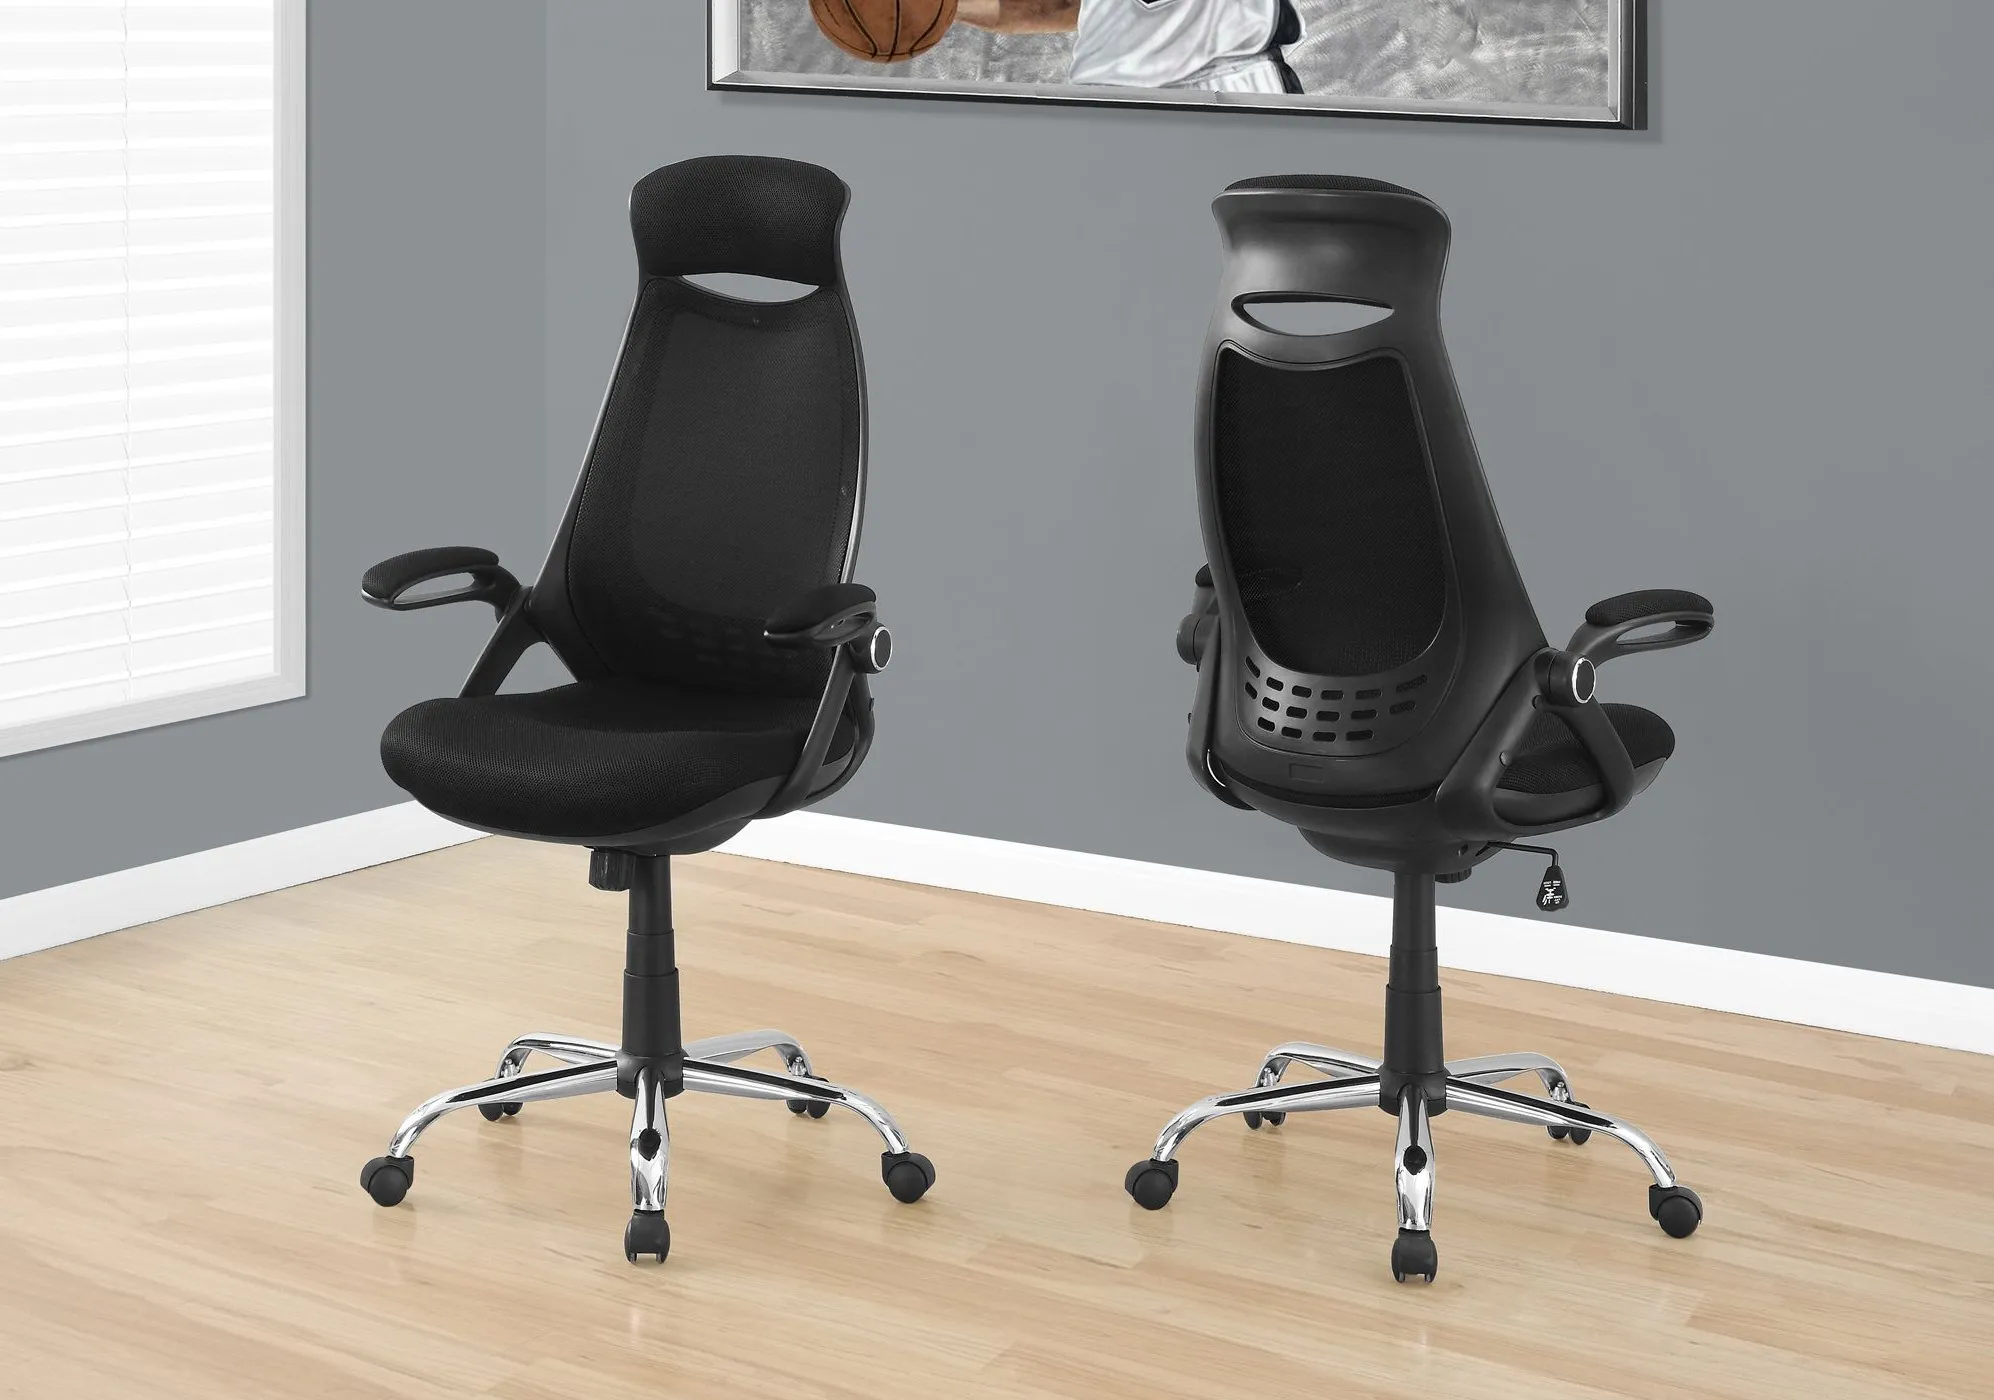 Office Chair, Adjustable Height, Swivel, Ergonomic, Armrests, Computer Desk, Work, Metal, Mesh, Black, Chrome, Contemporary, Modern